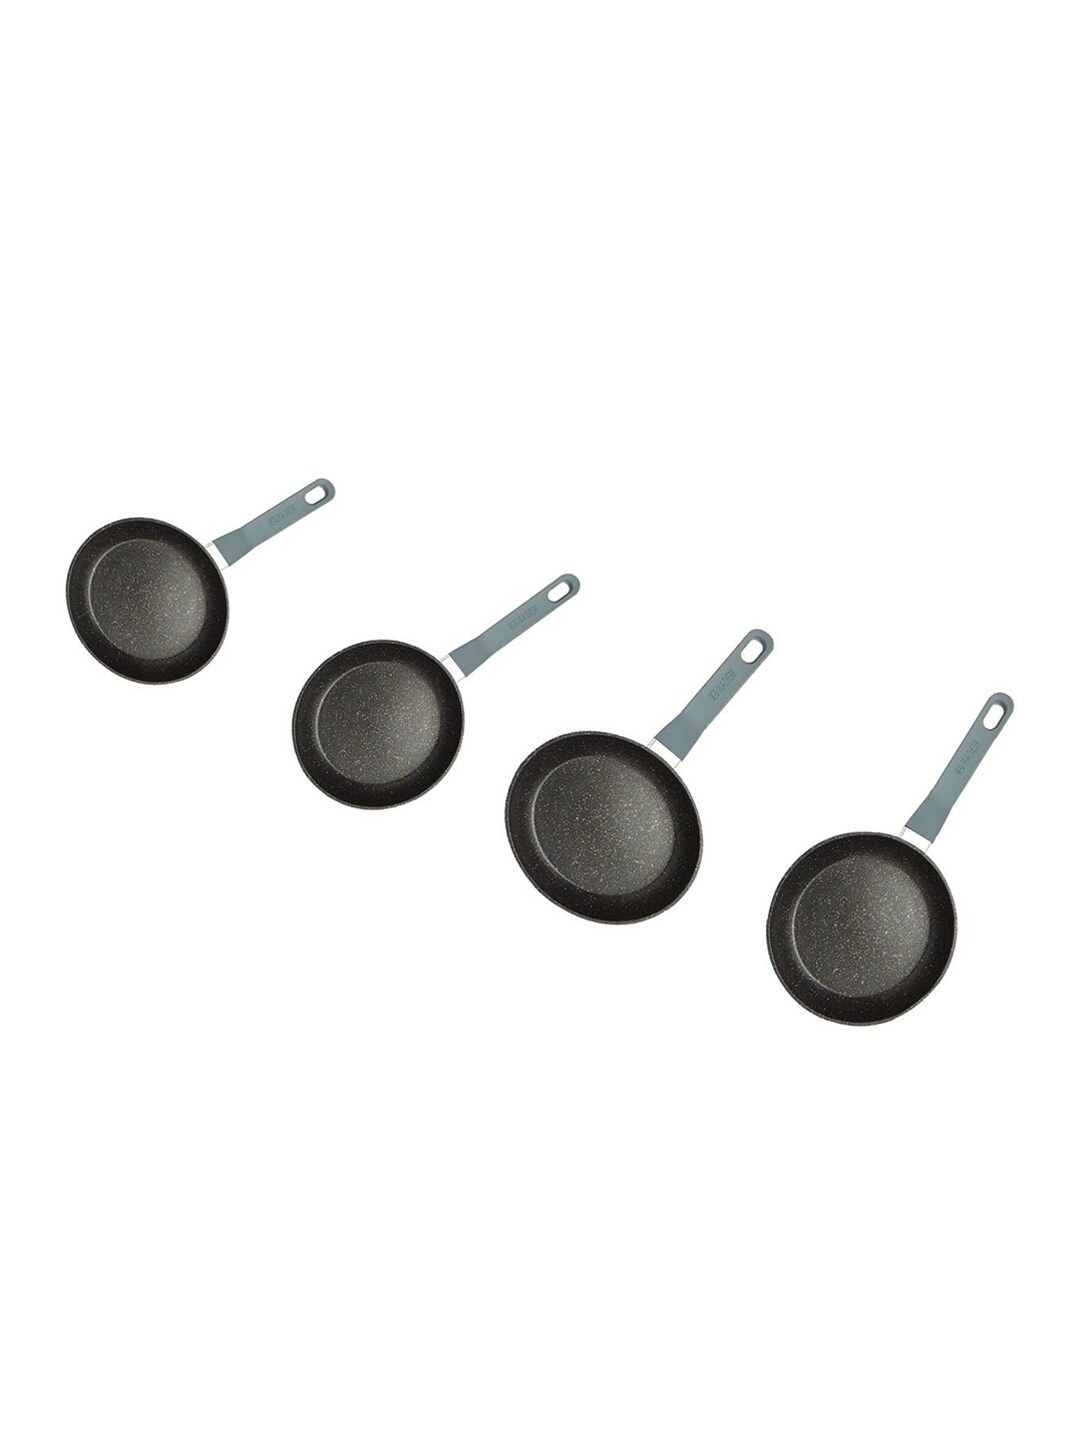 Haden Black Set of 4 Frying Pans Price in India